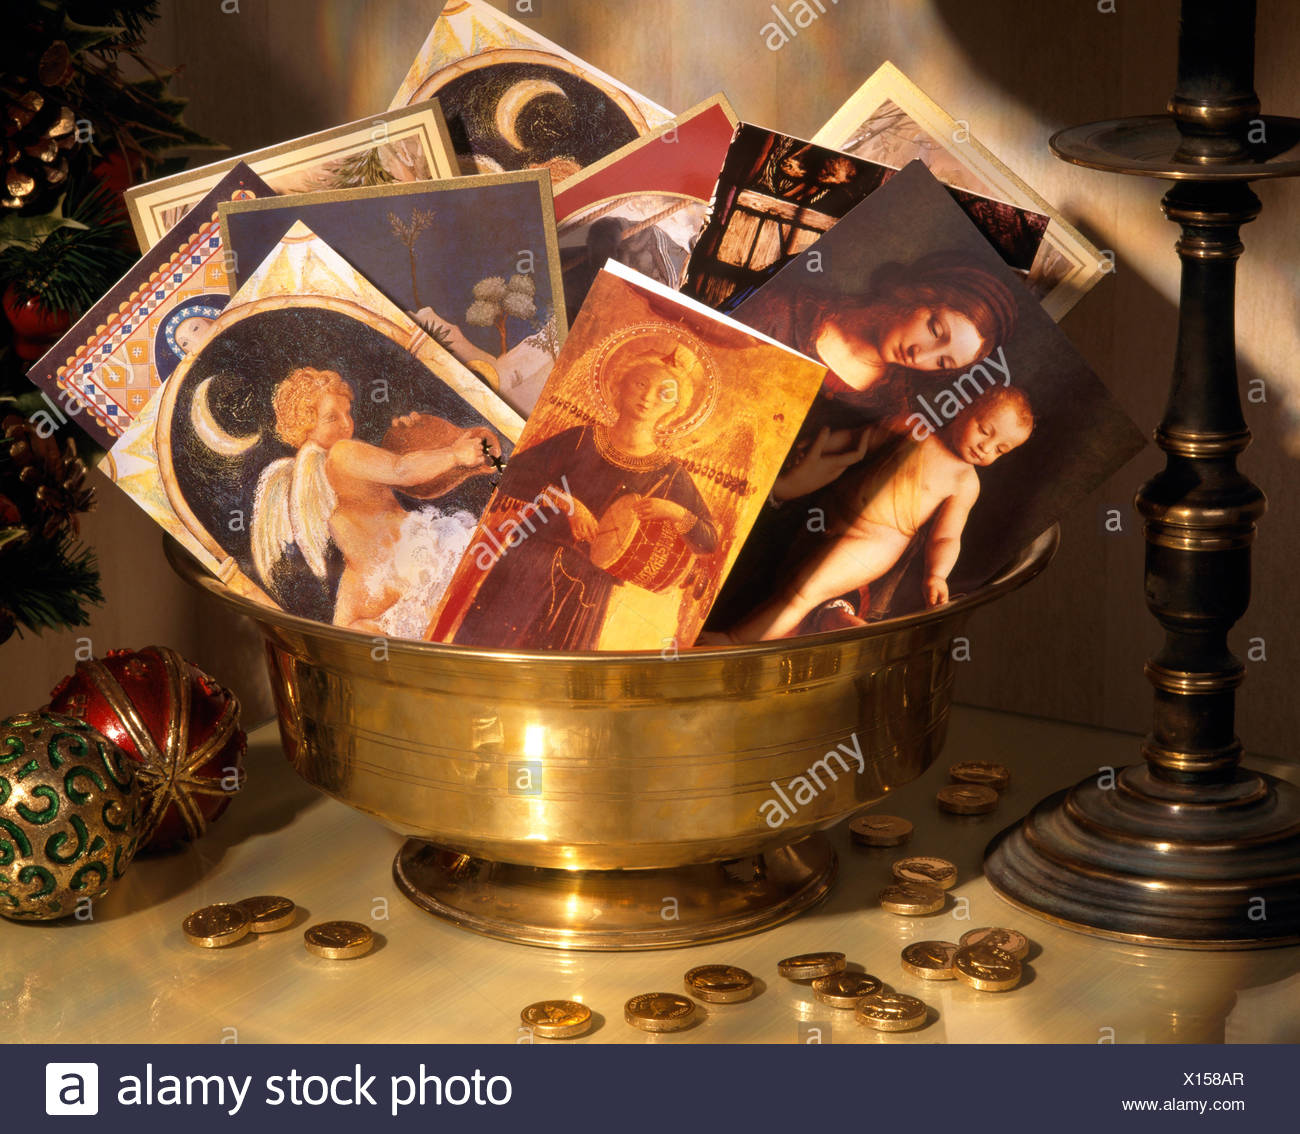 Sfondi Natalizi Religiosi.Religious Christmas Cards Immagini E Fotos Stock Alamy